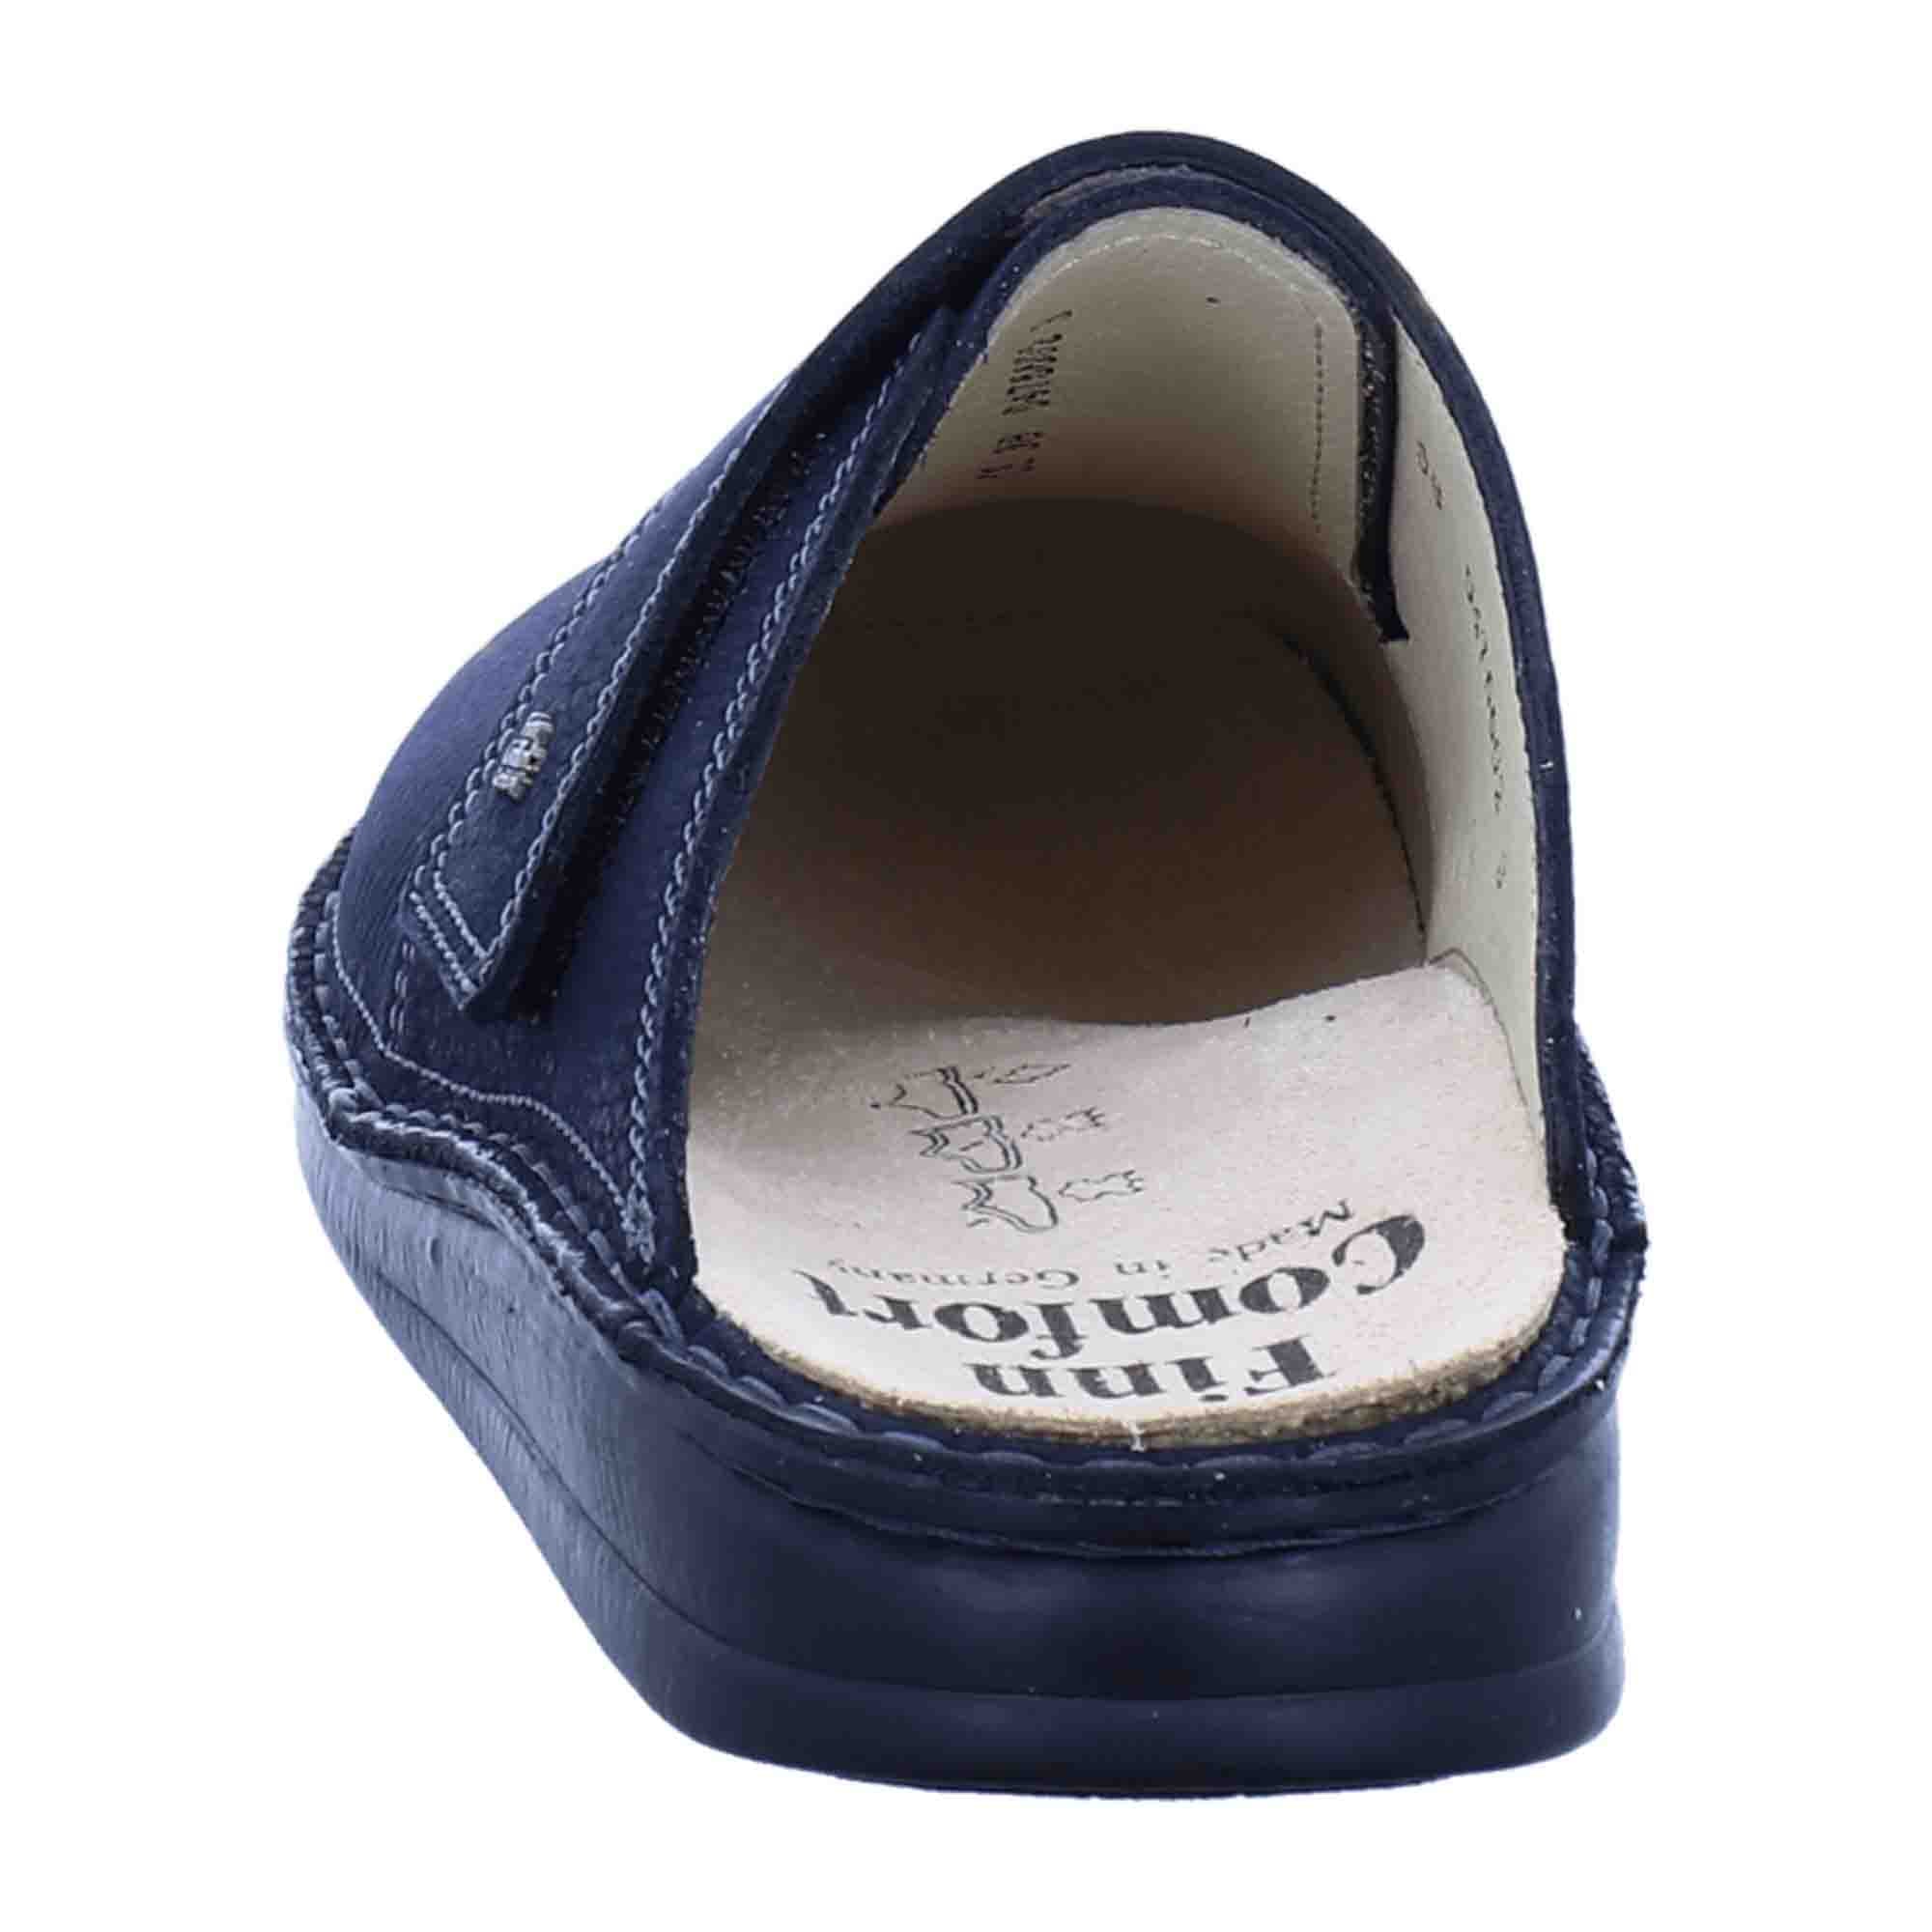 Finn Comfort Amalfi Men's Comfort Clogs, Stylish Blue